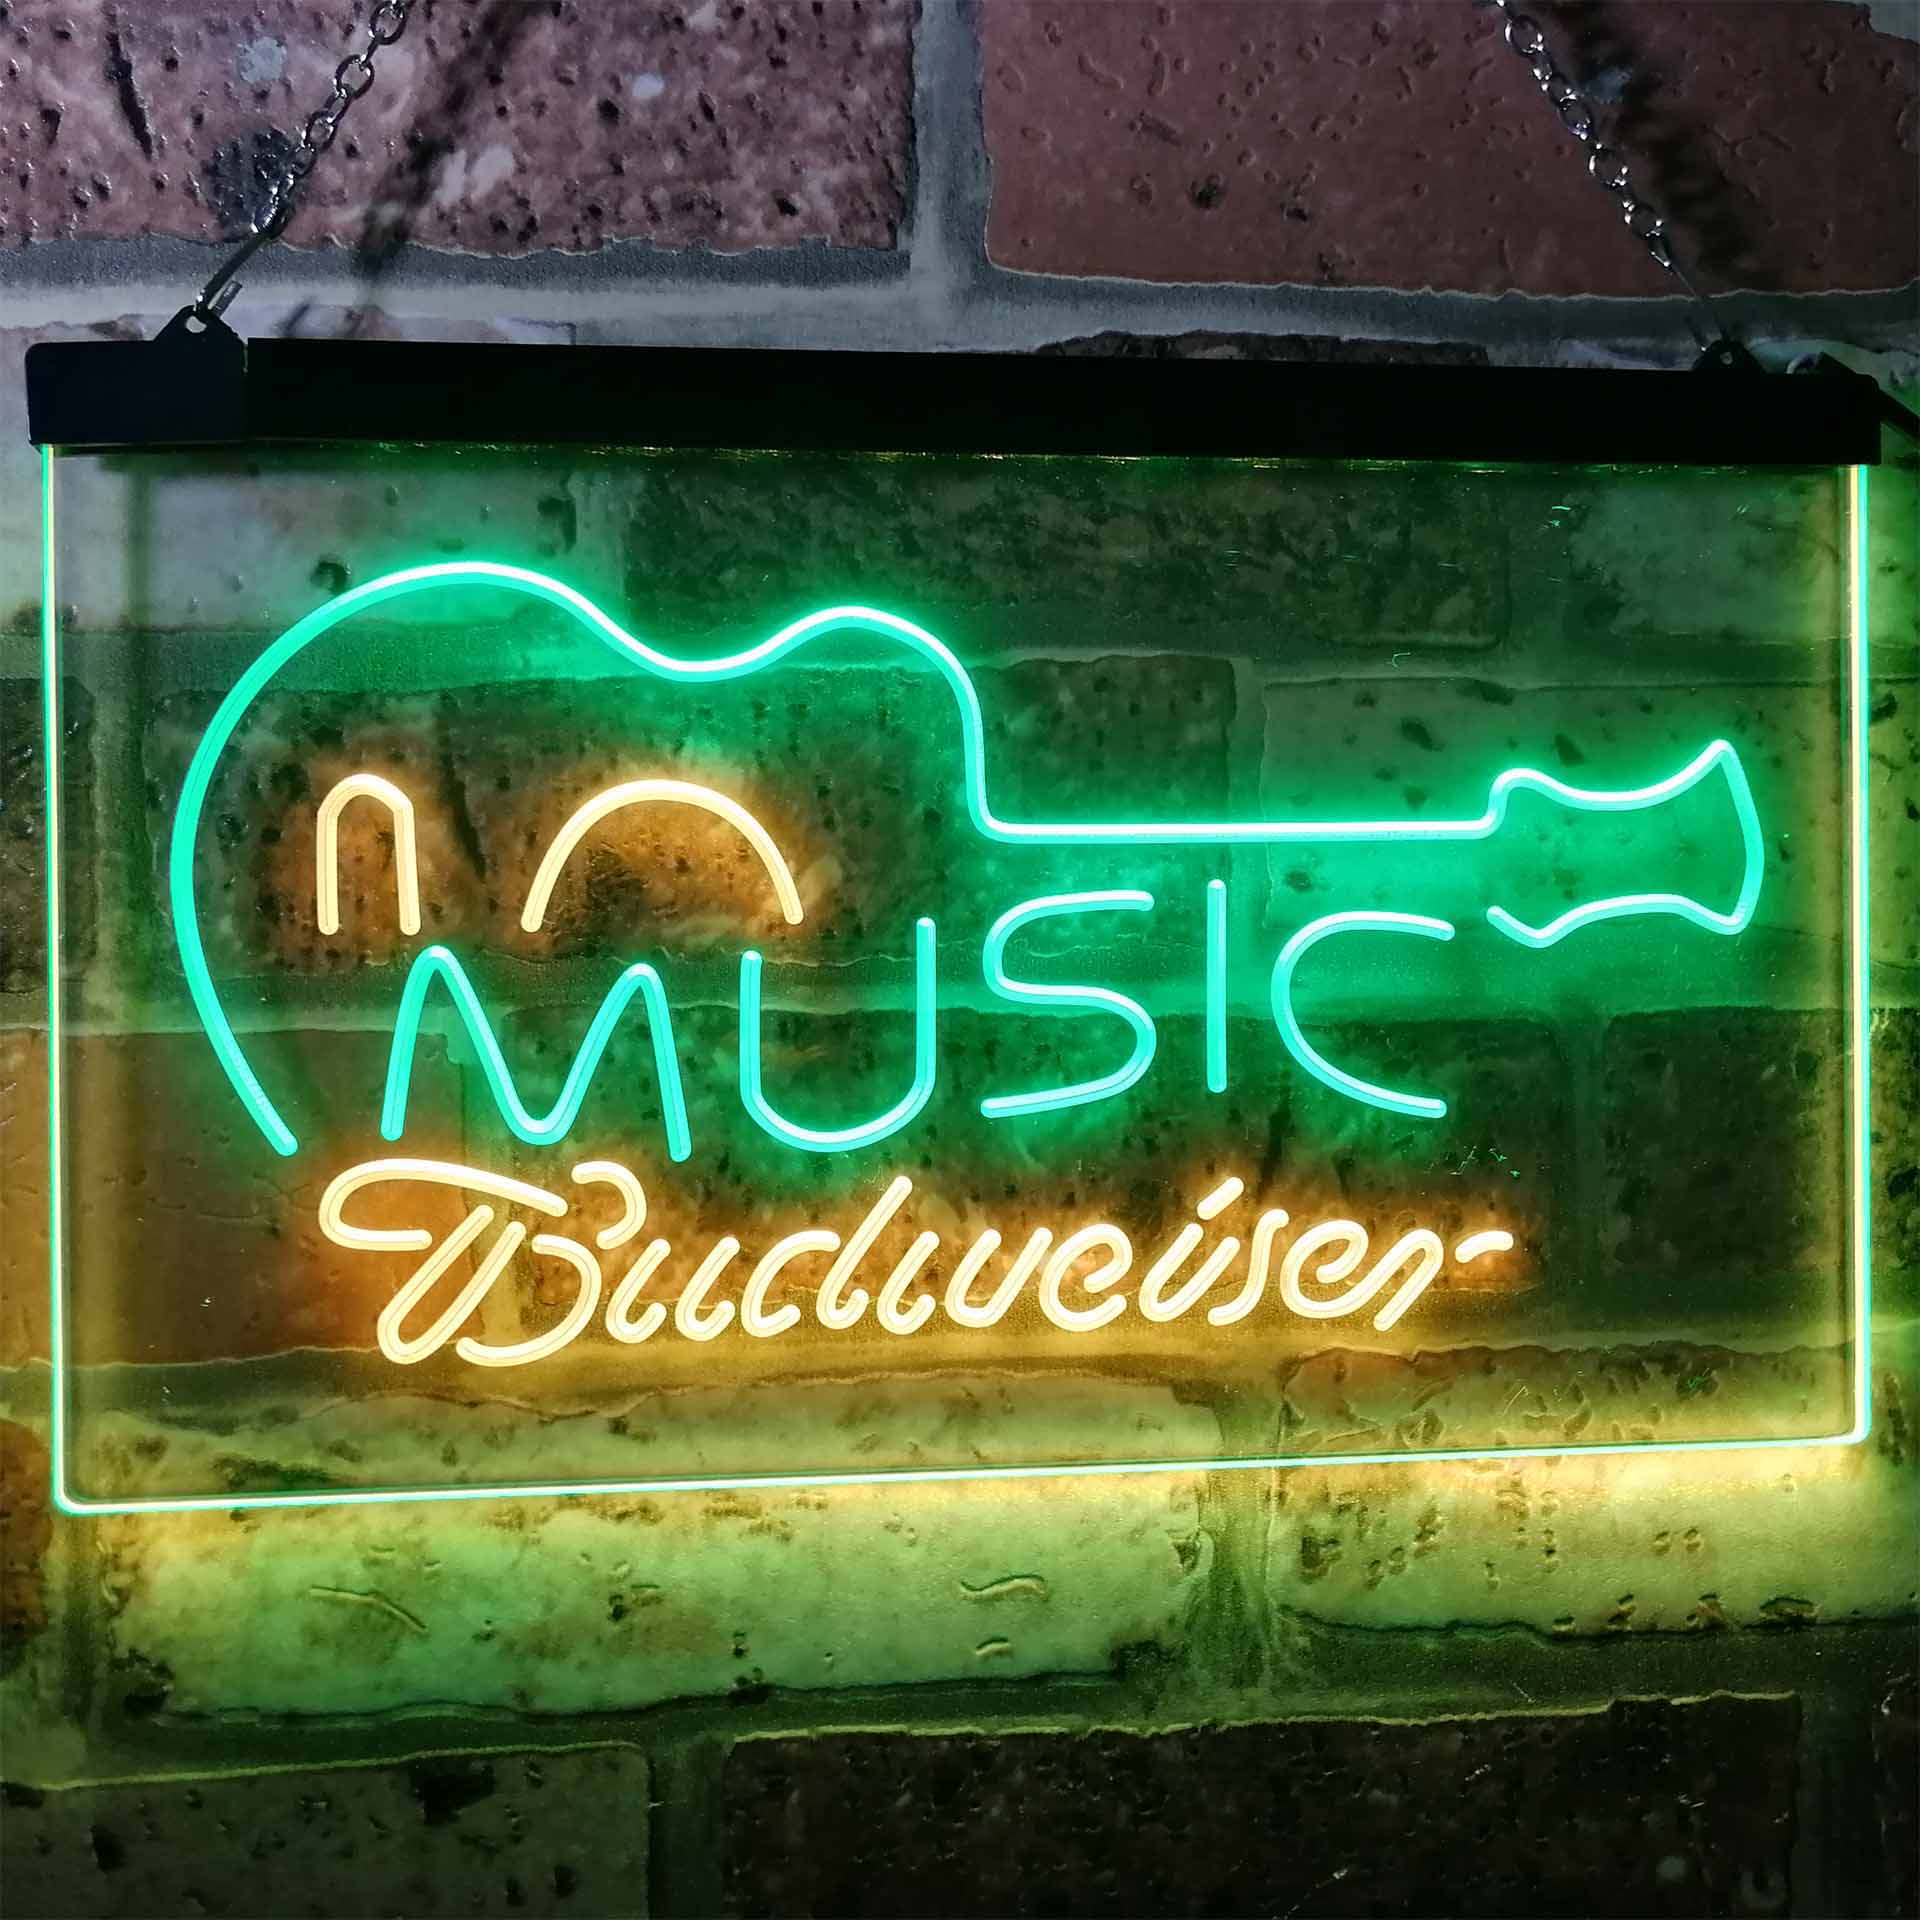 Budweiser Music Guitar Beer Bar Decor Neon LED Sign